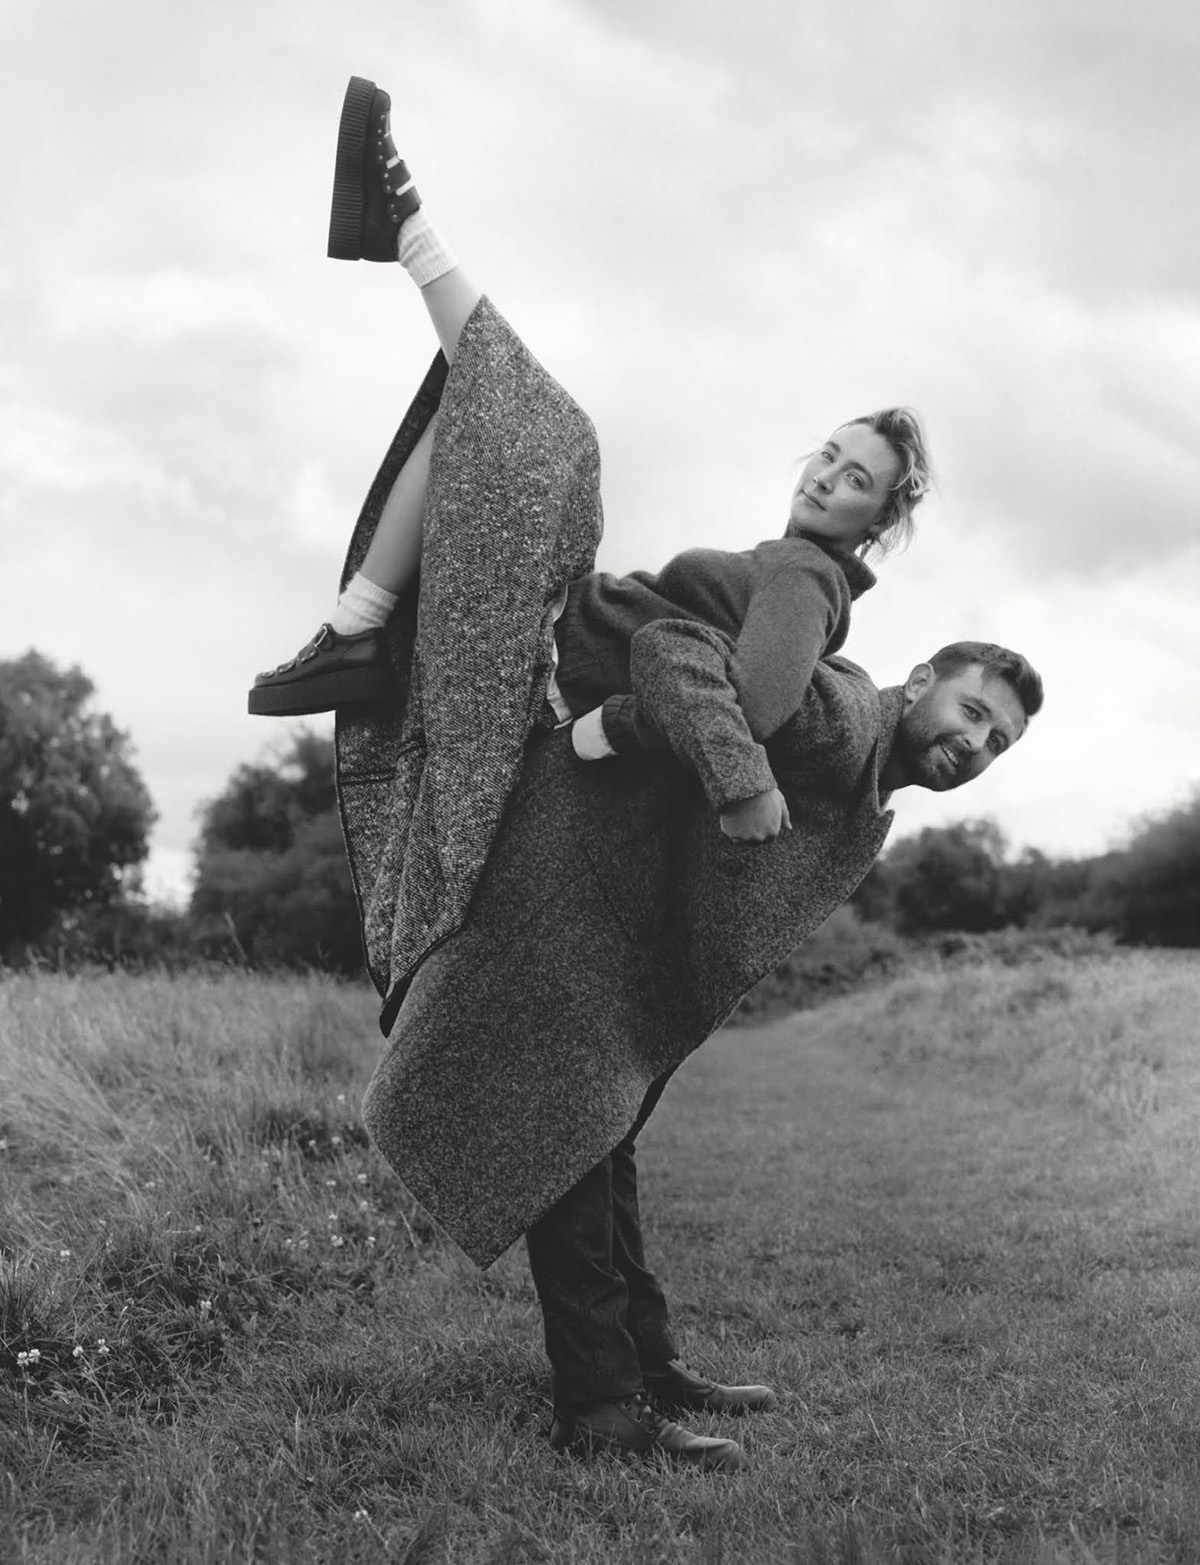 Saoirse Ronan and James McArdle by Ben Weller for British Vogue November 2021